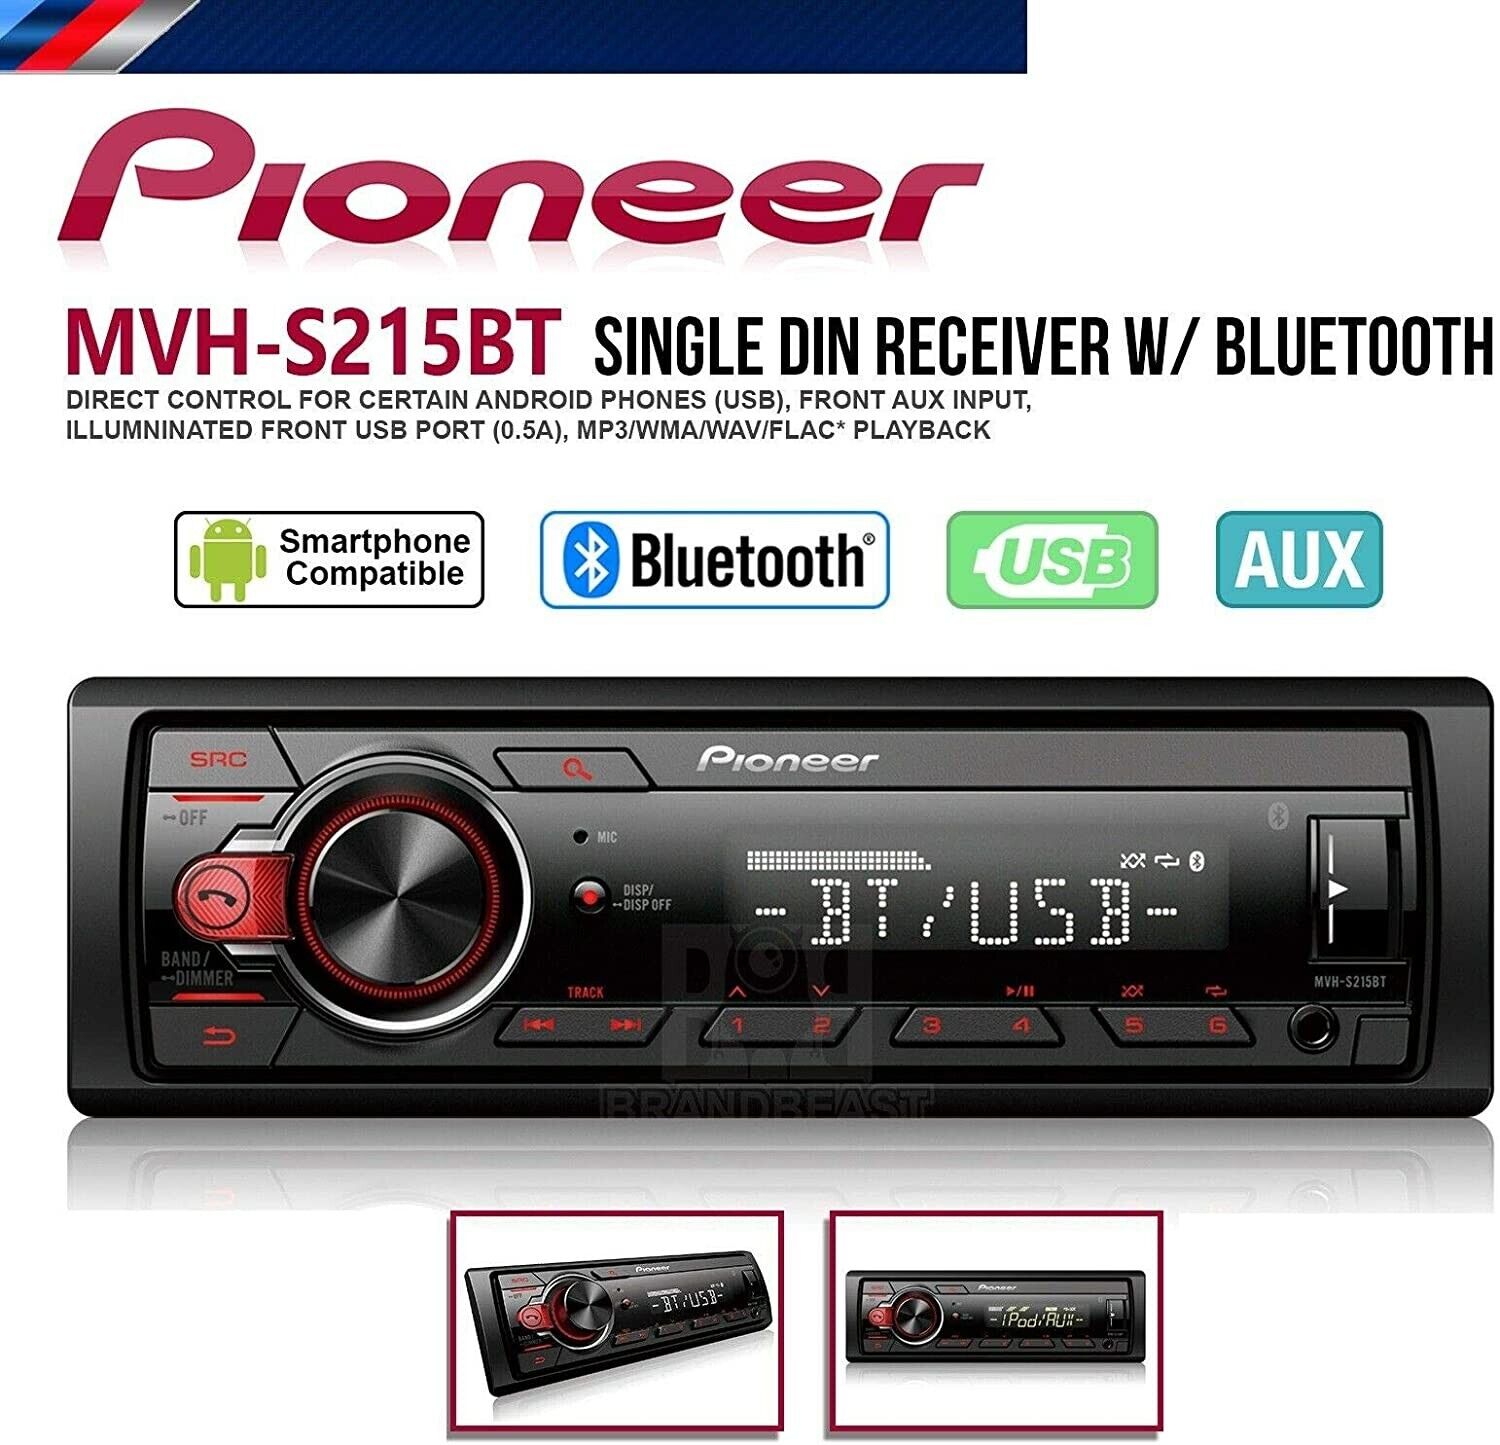 Pioneer MVH-S215BT 1-DIN AM/FM Stereo USB AUX MP3 Digital Media Car Receiver